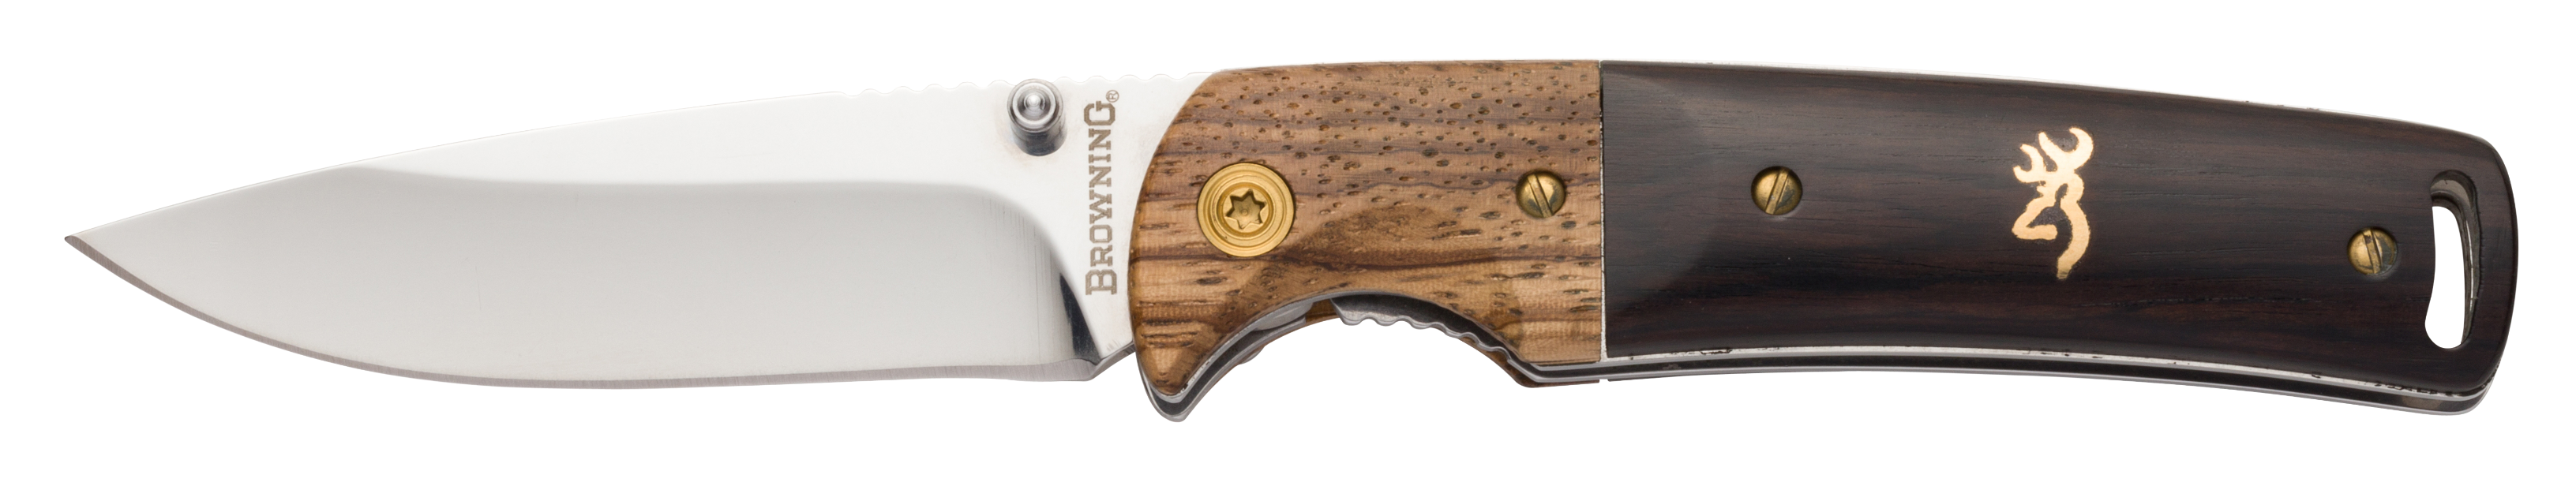 Browning Buckmark, Brn 3220231    Bkmk Hunter Folder Knife